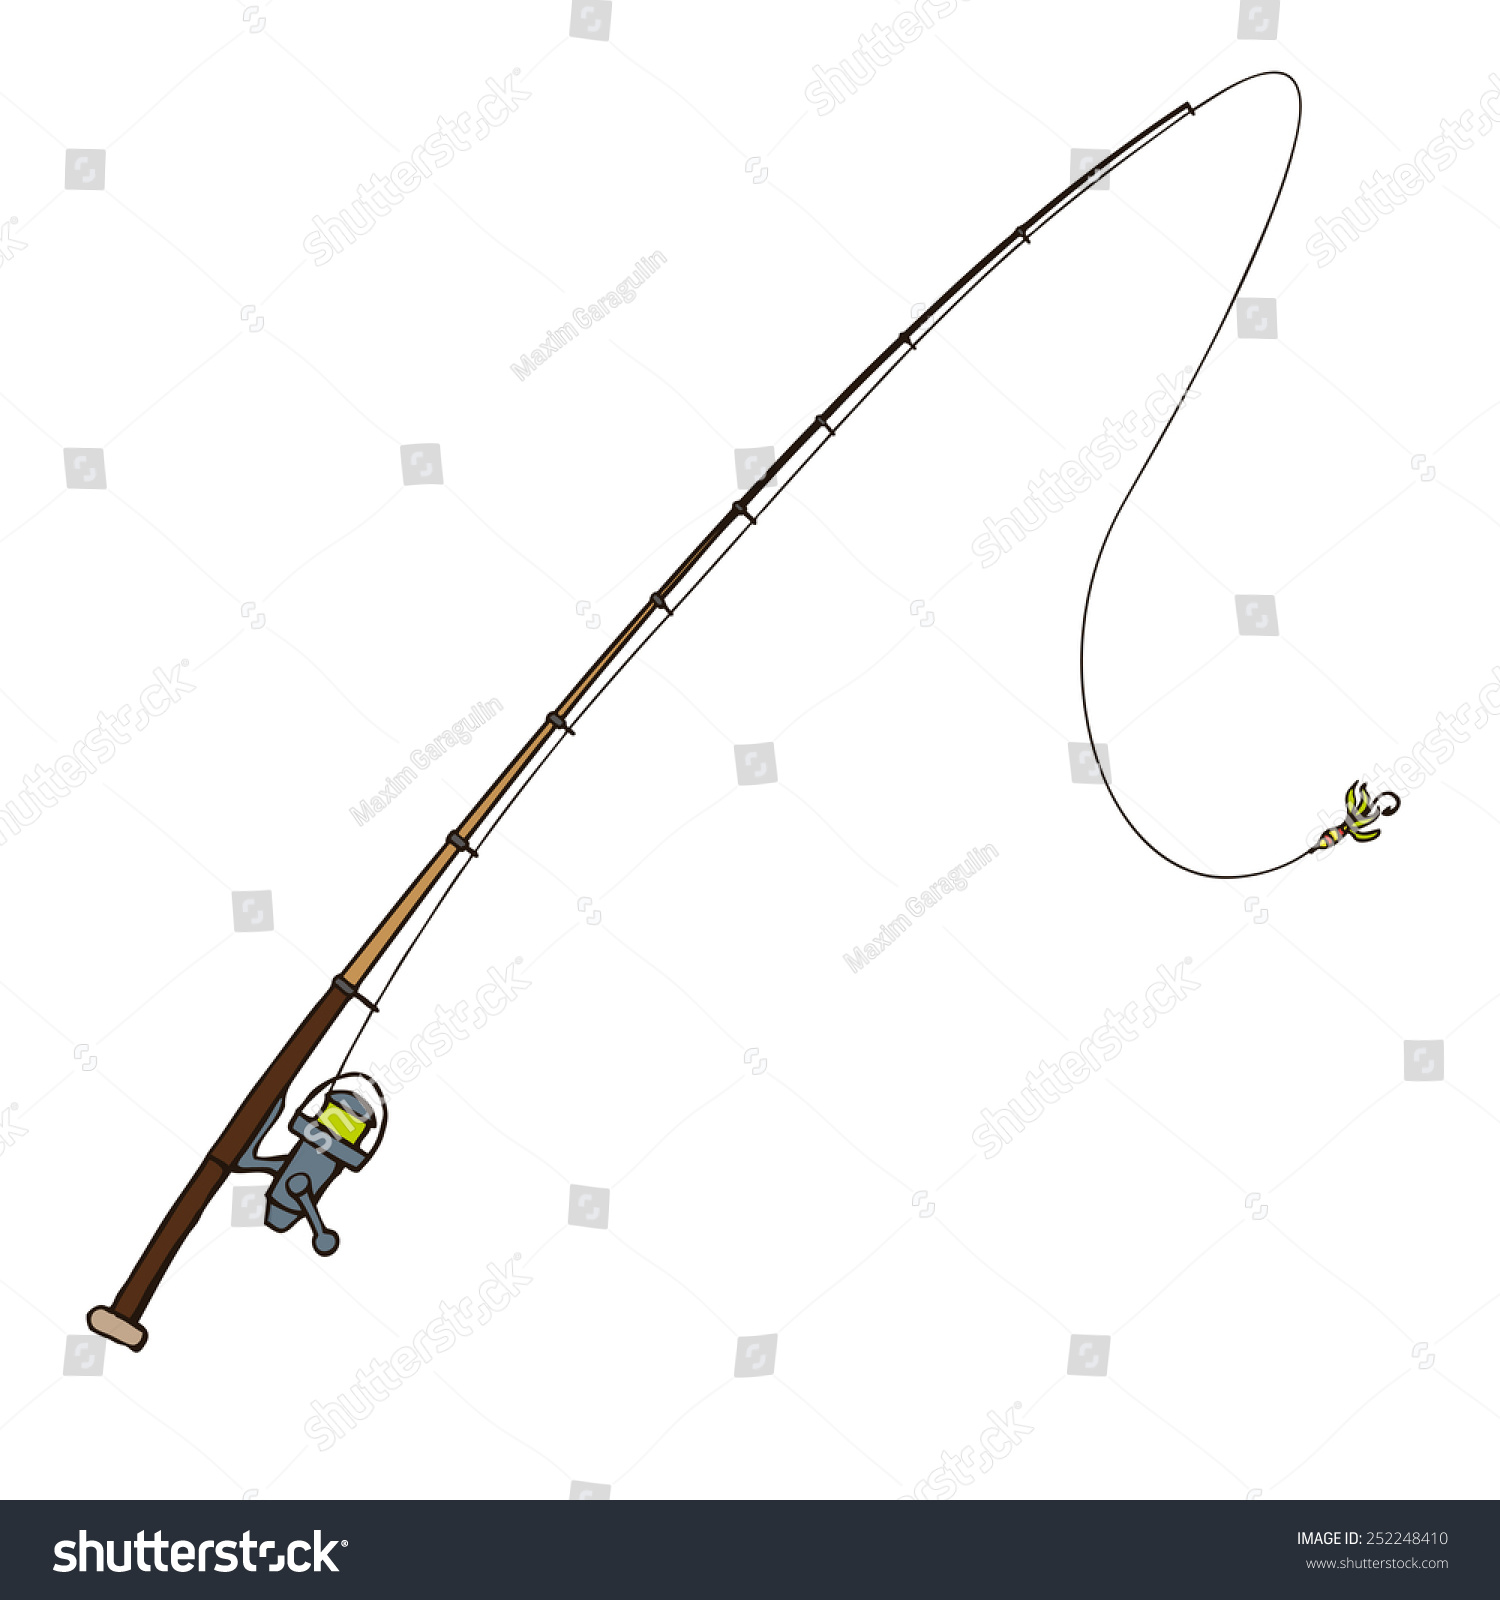 Fishing rod with fly bait. Illustration. Isolated on white. #252248410